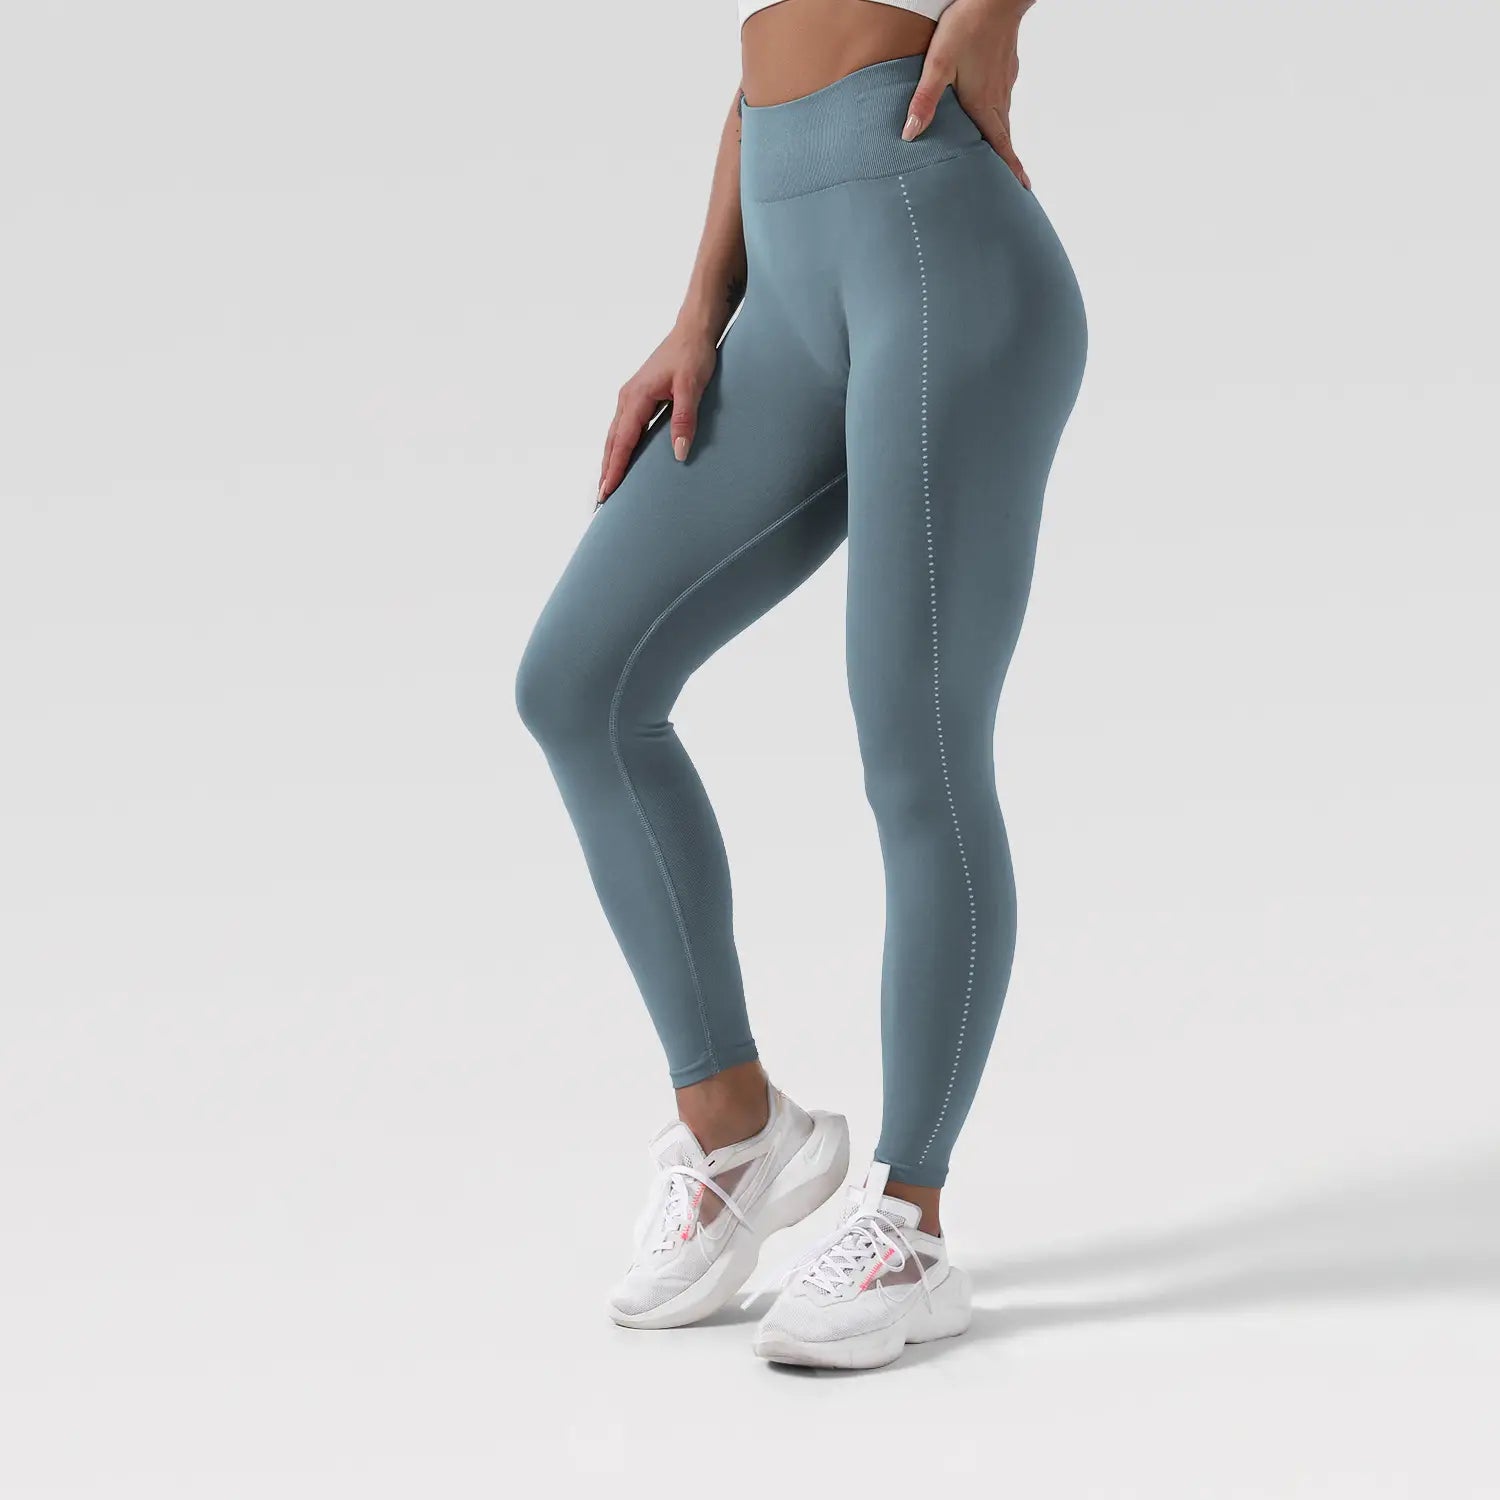 Lovemi - Tight seamless yoga pants